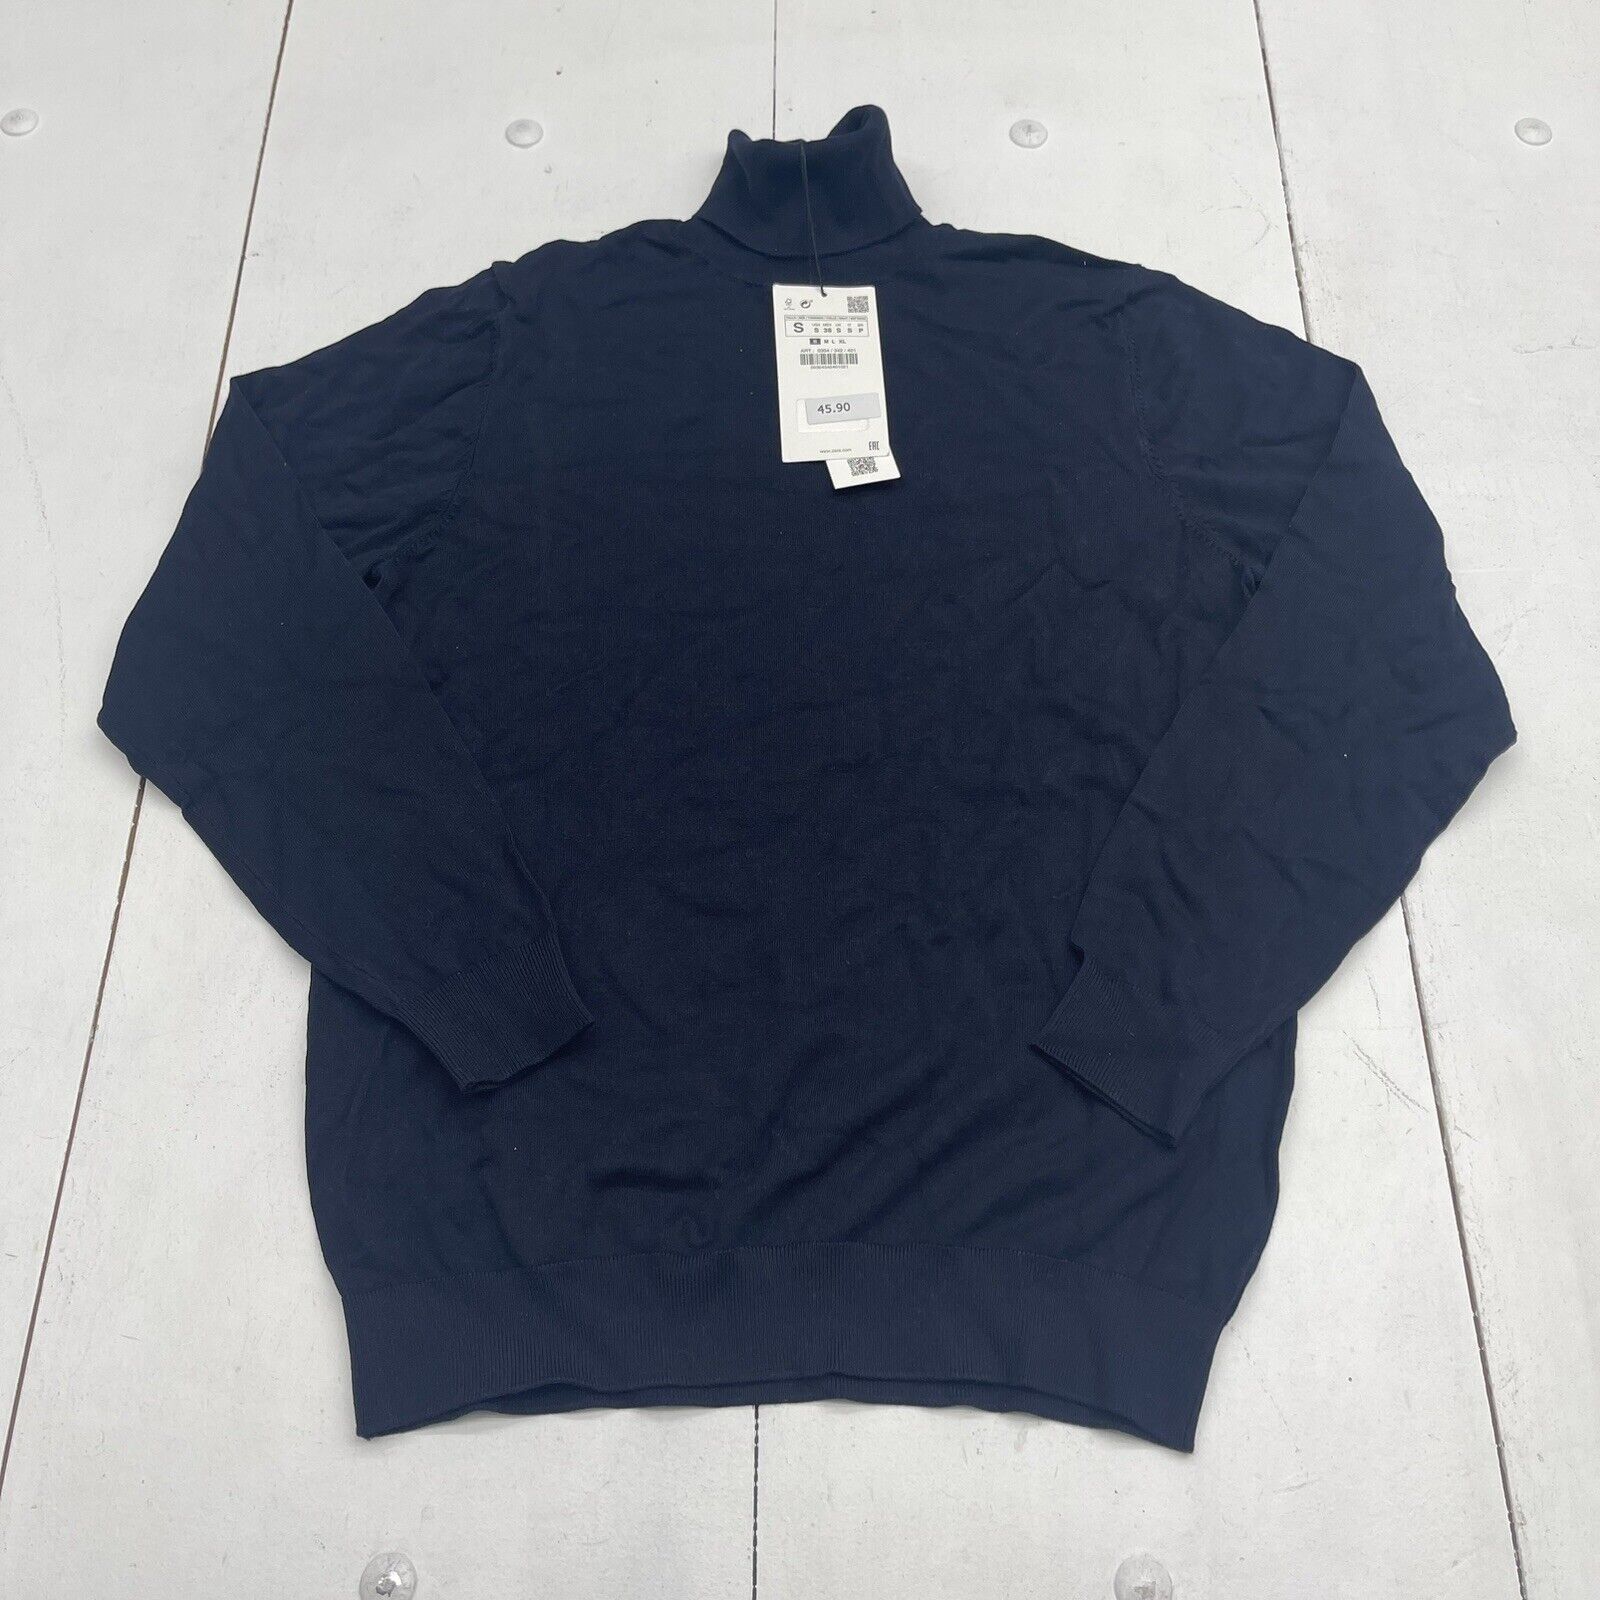 Zara Navy Blue High Neck Long Sleeve Sweater Mens Size Small New